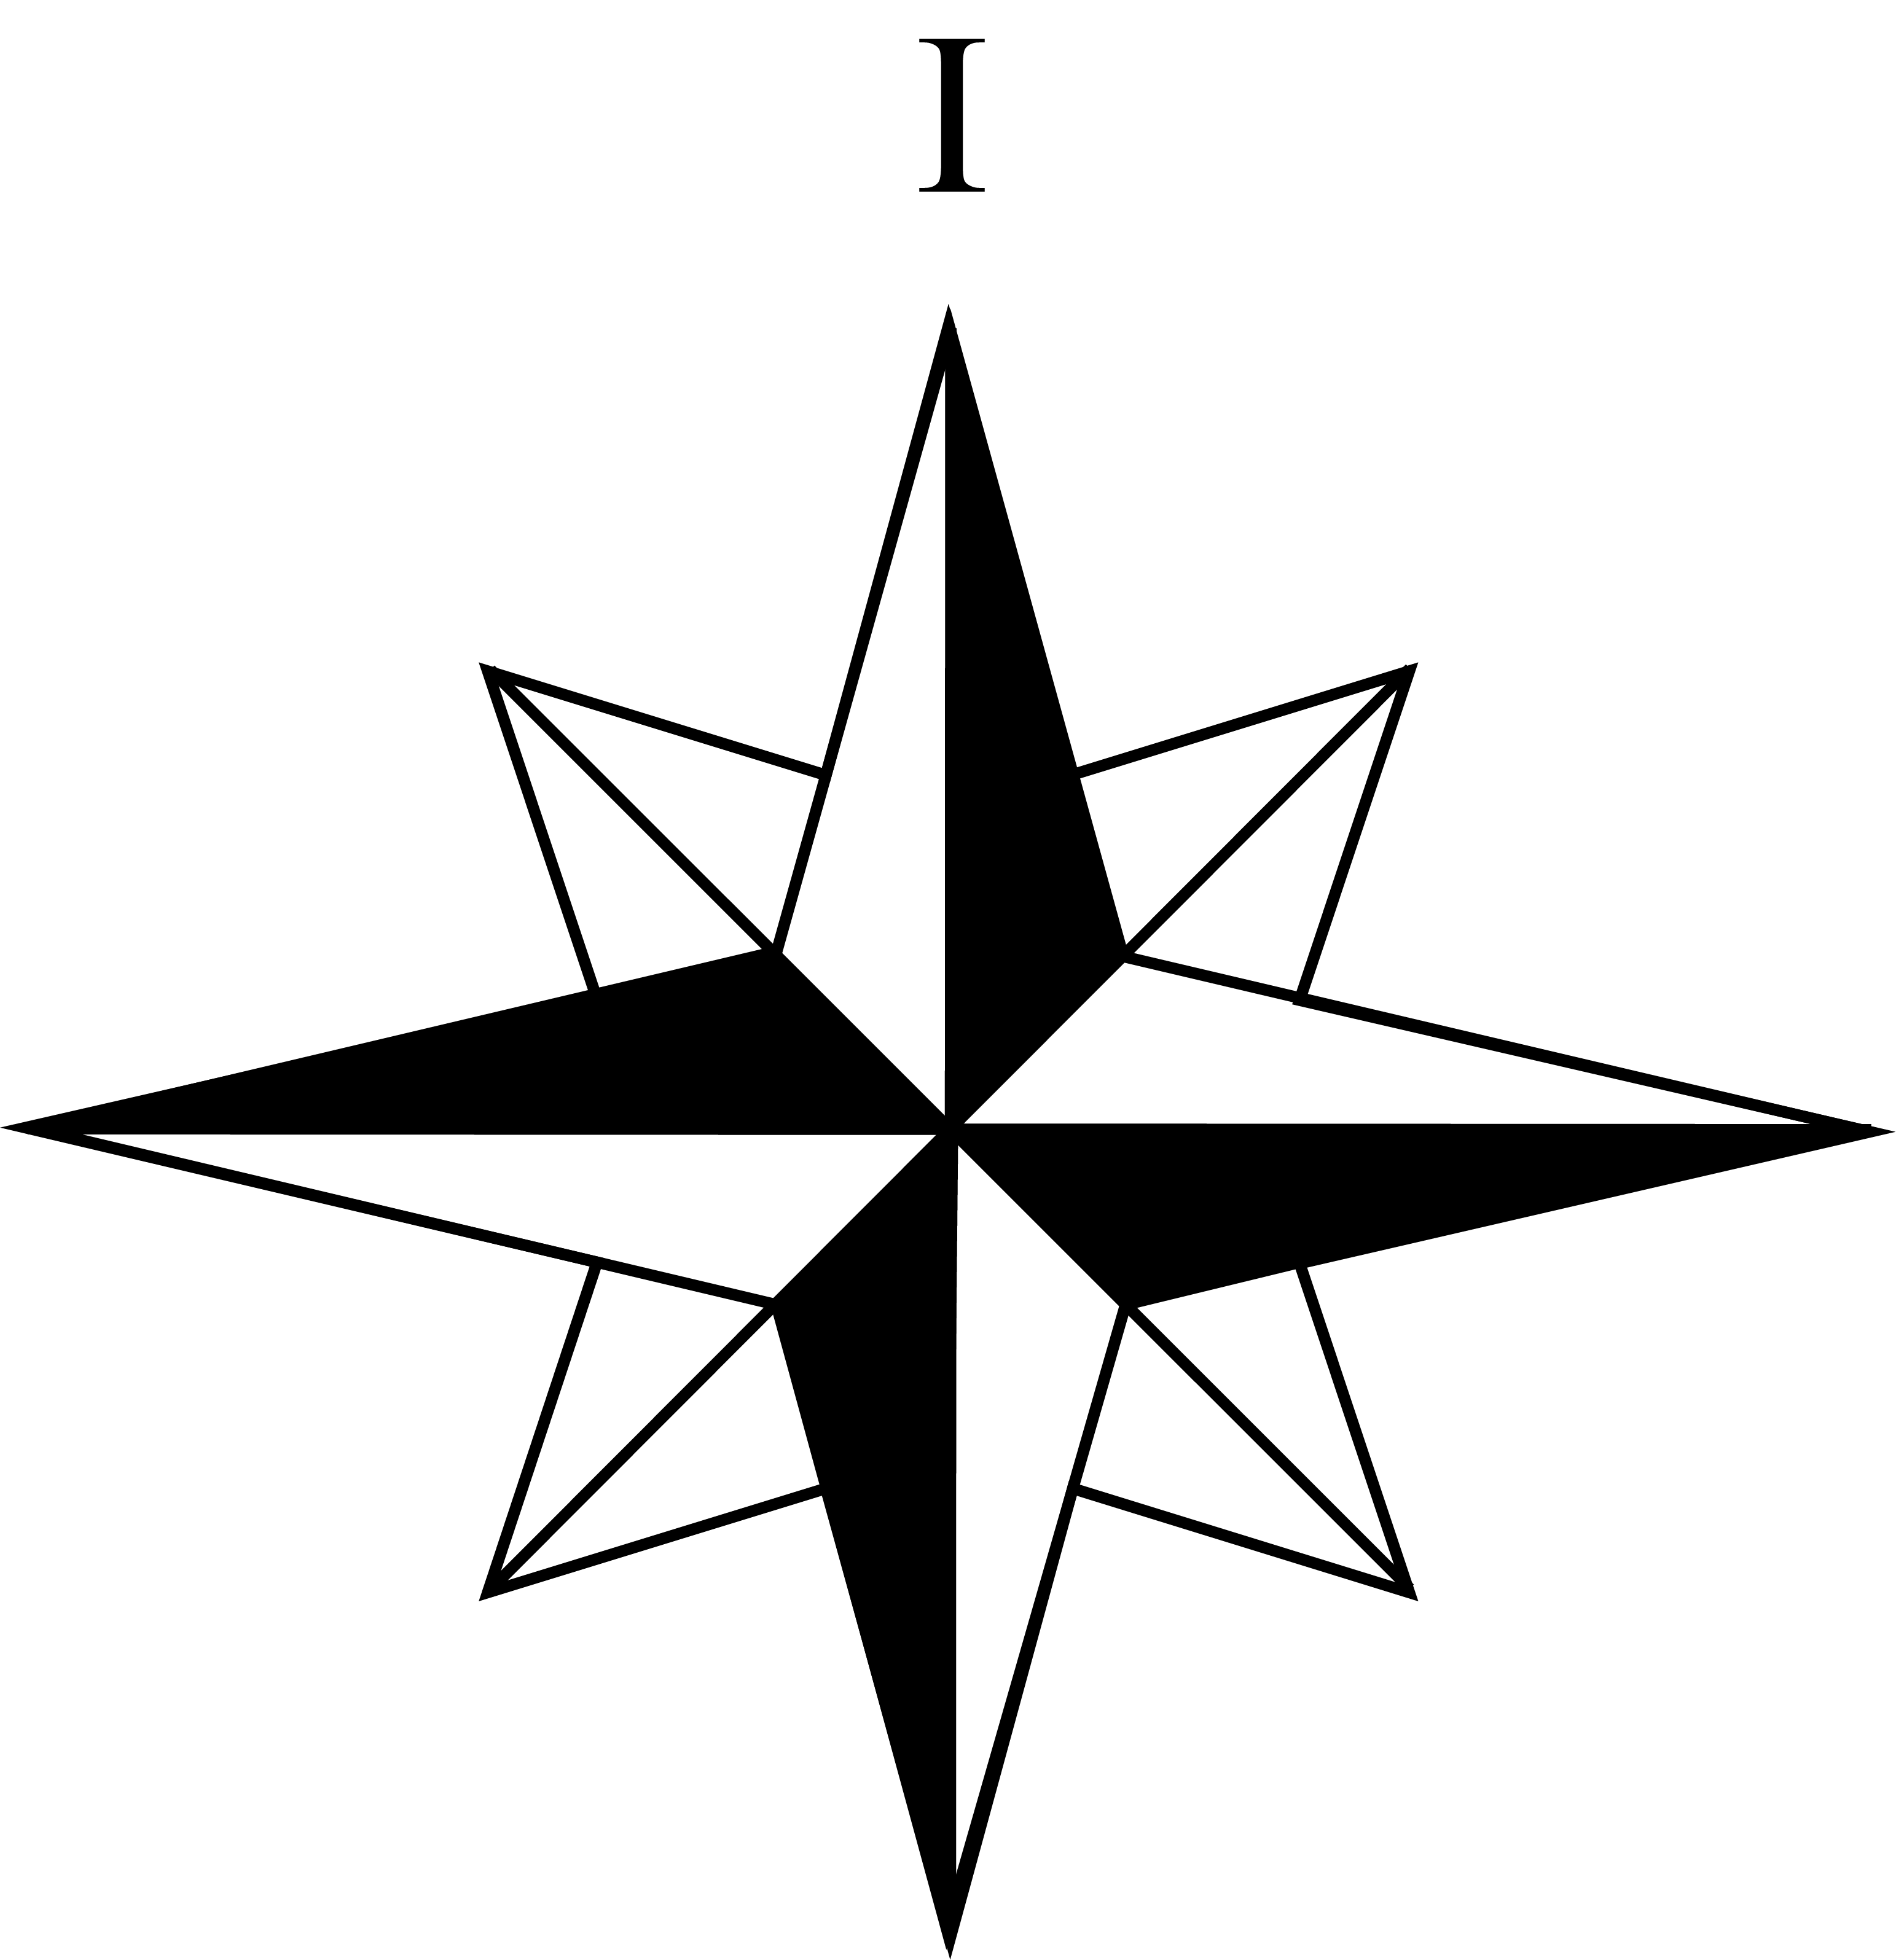 Intergroup Logo